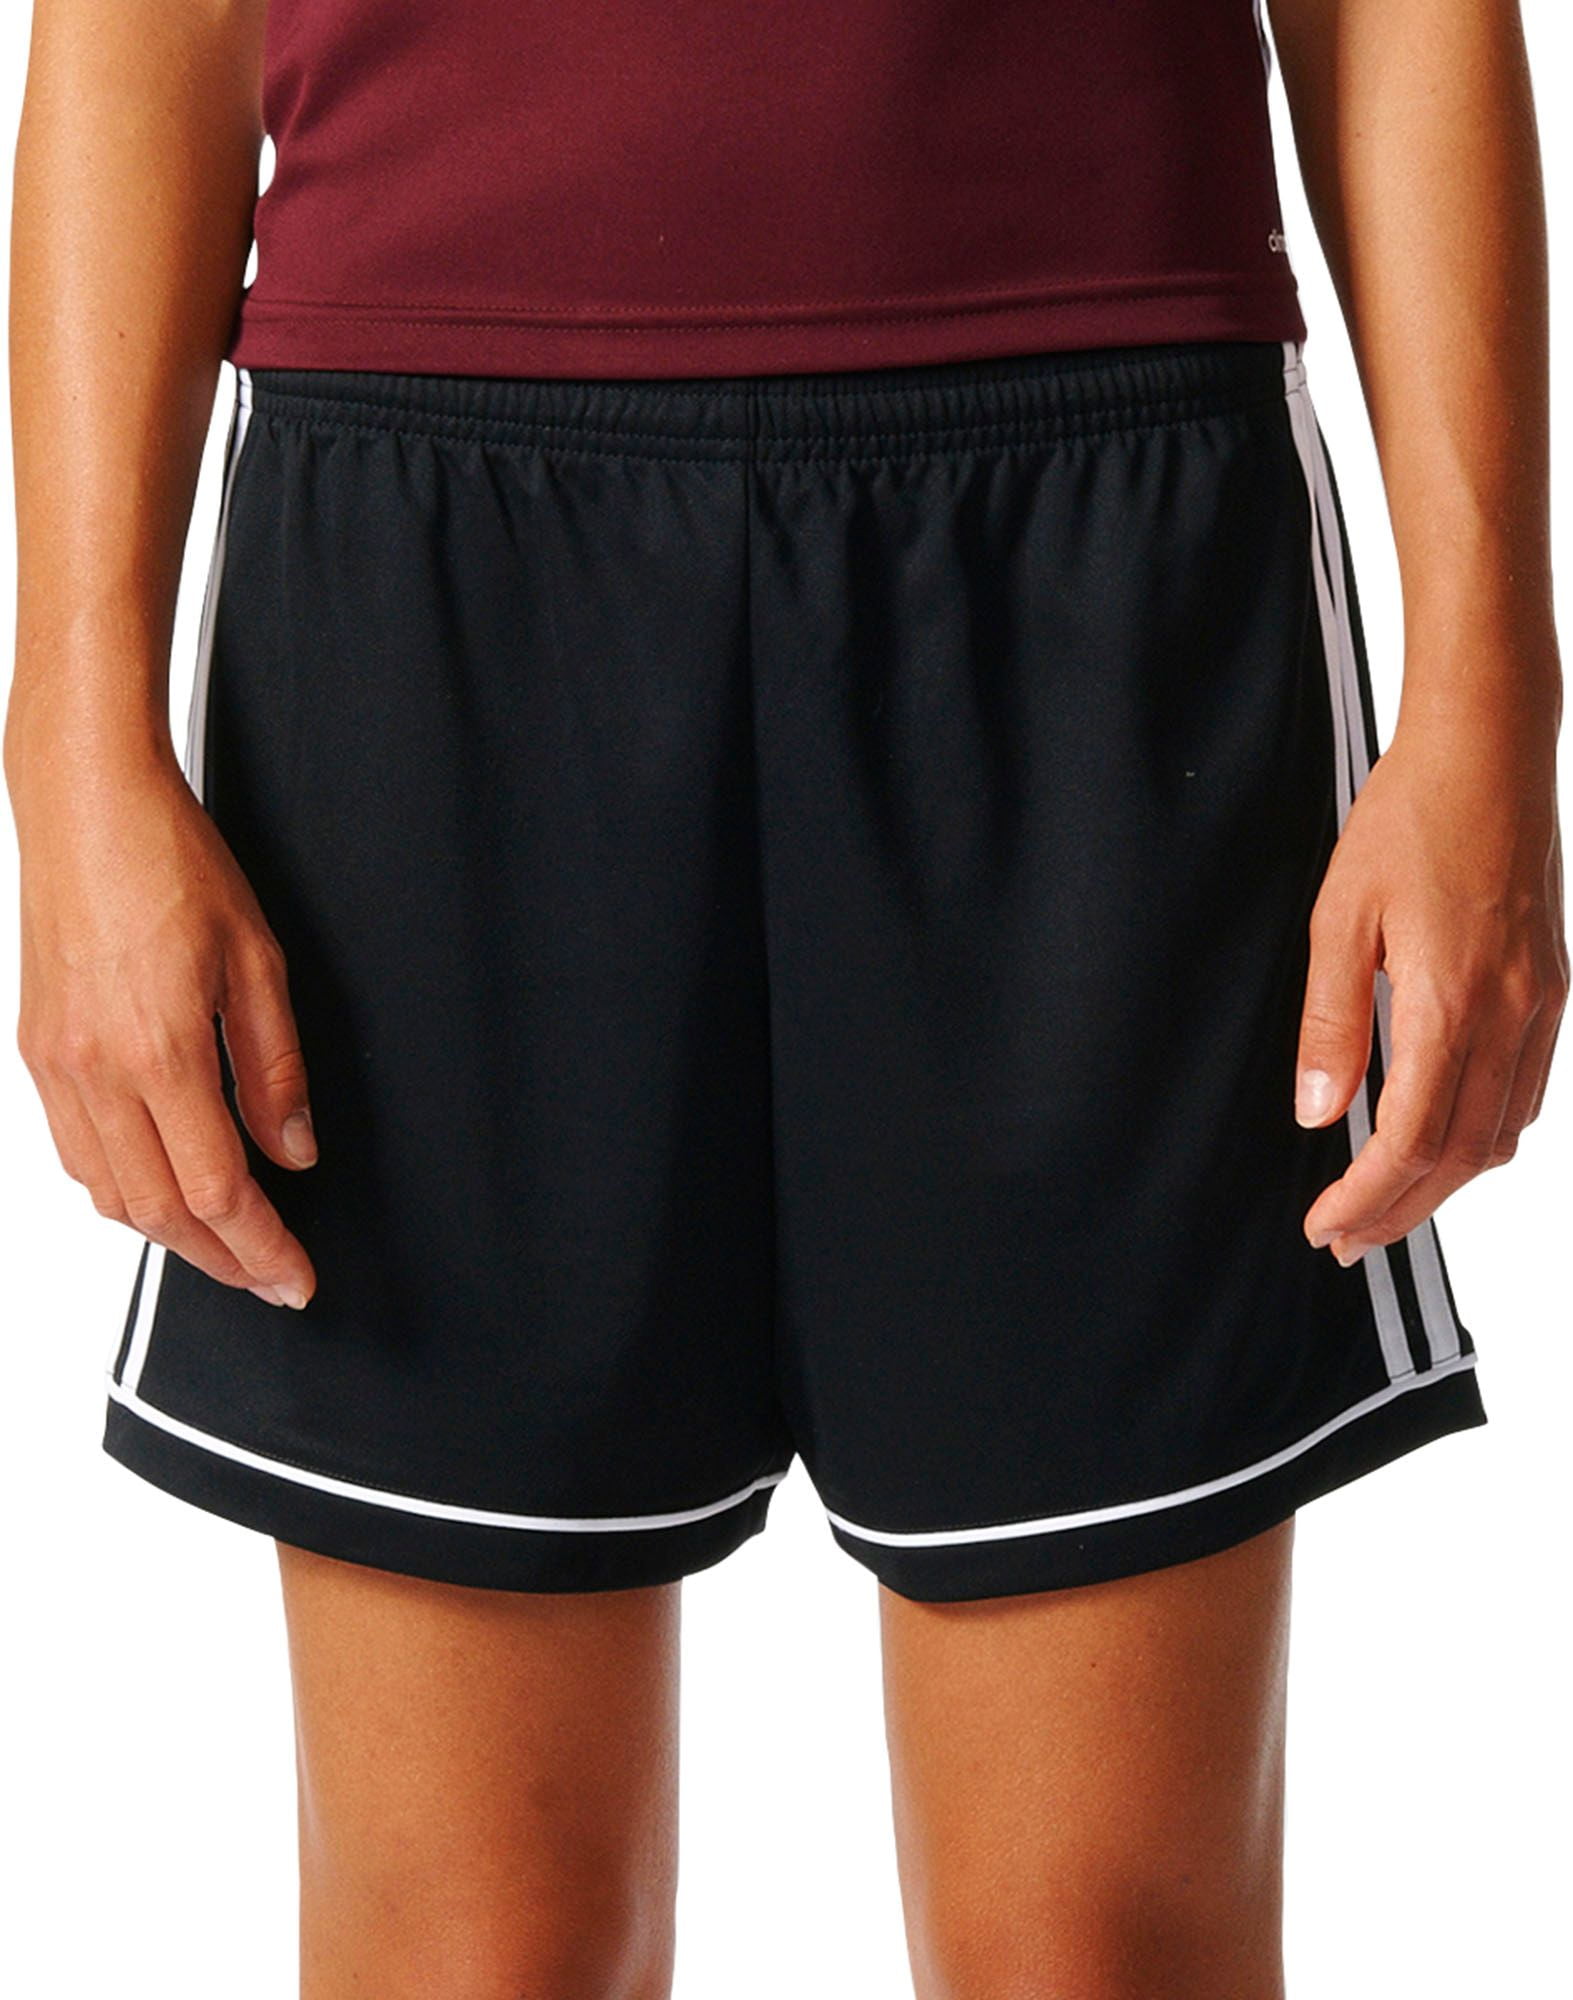 adidas girls soccer shorts